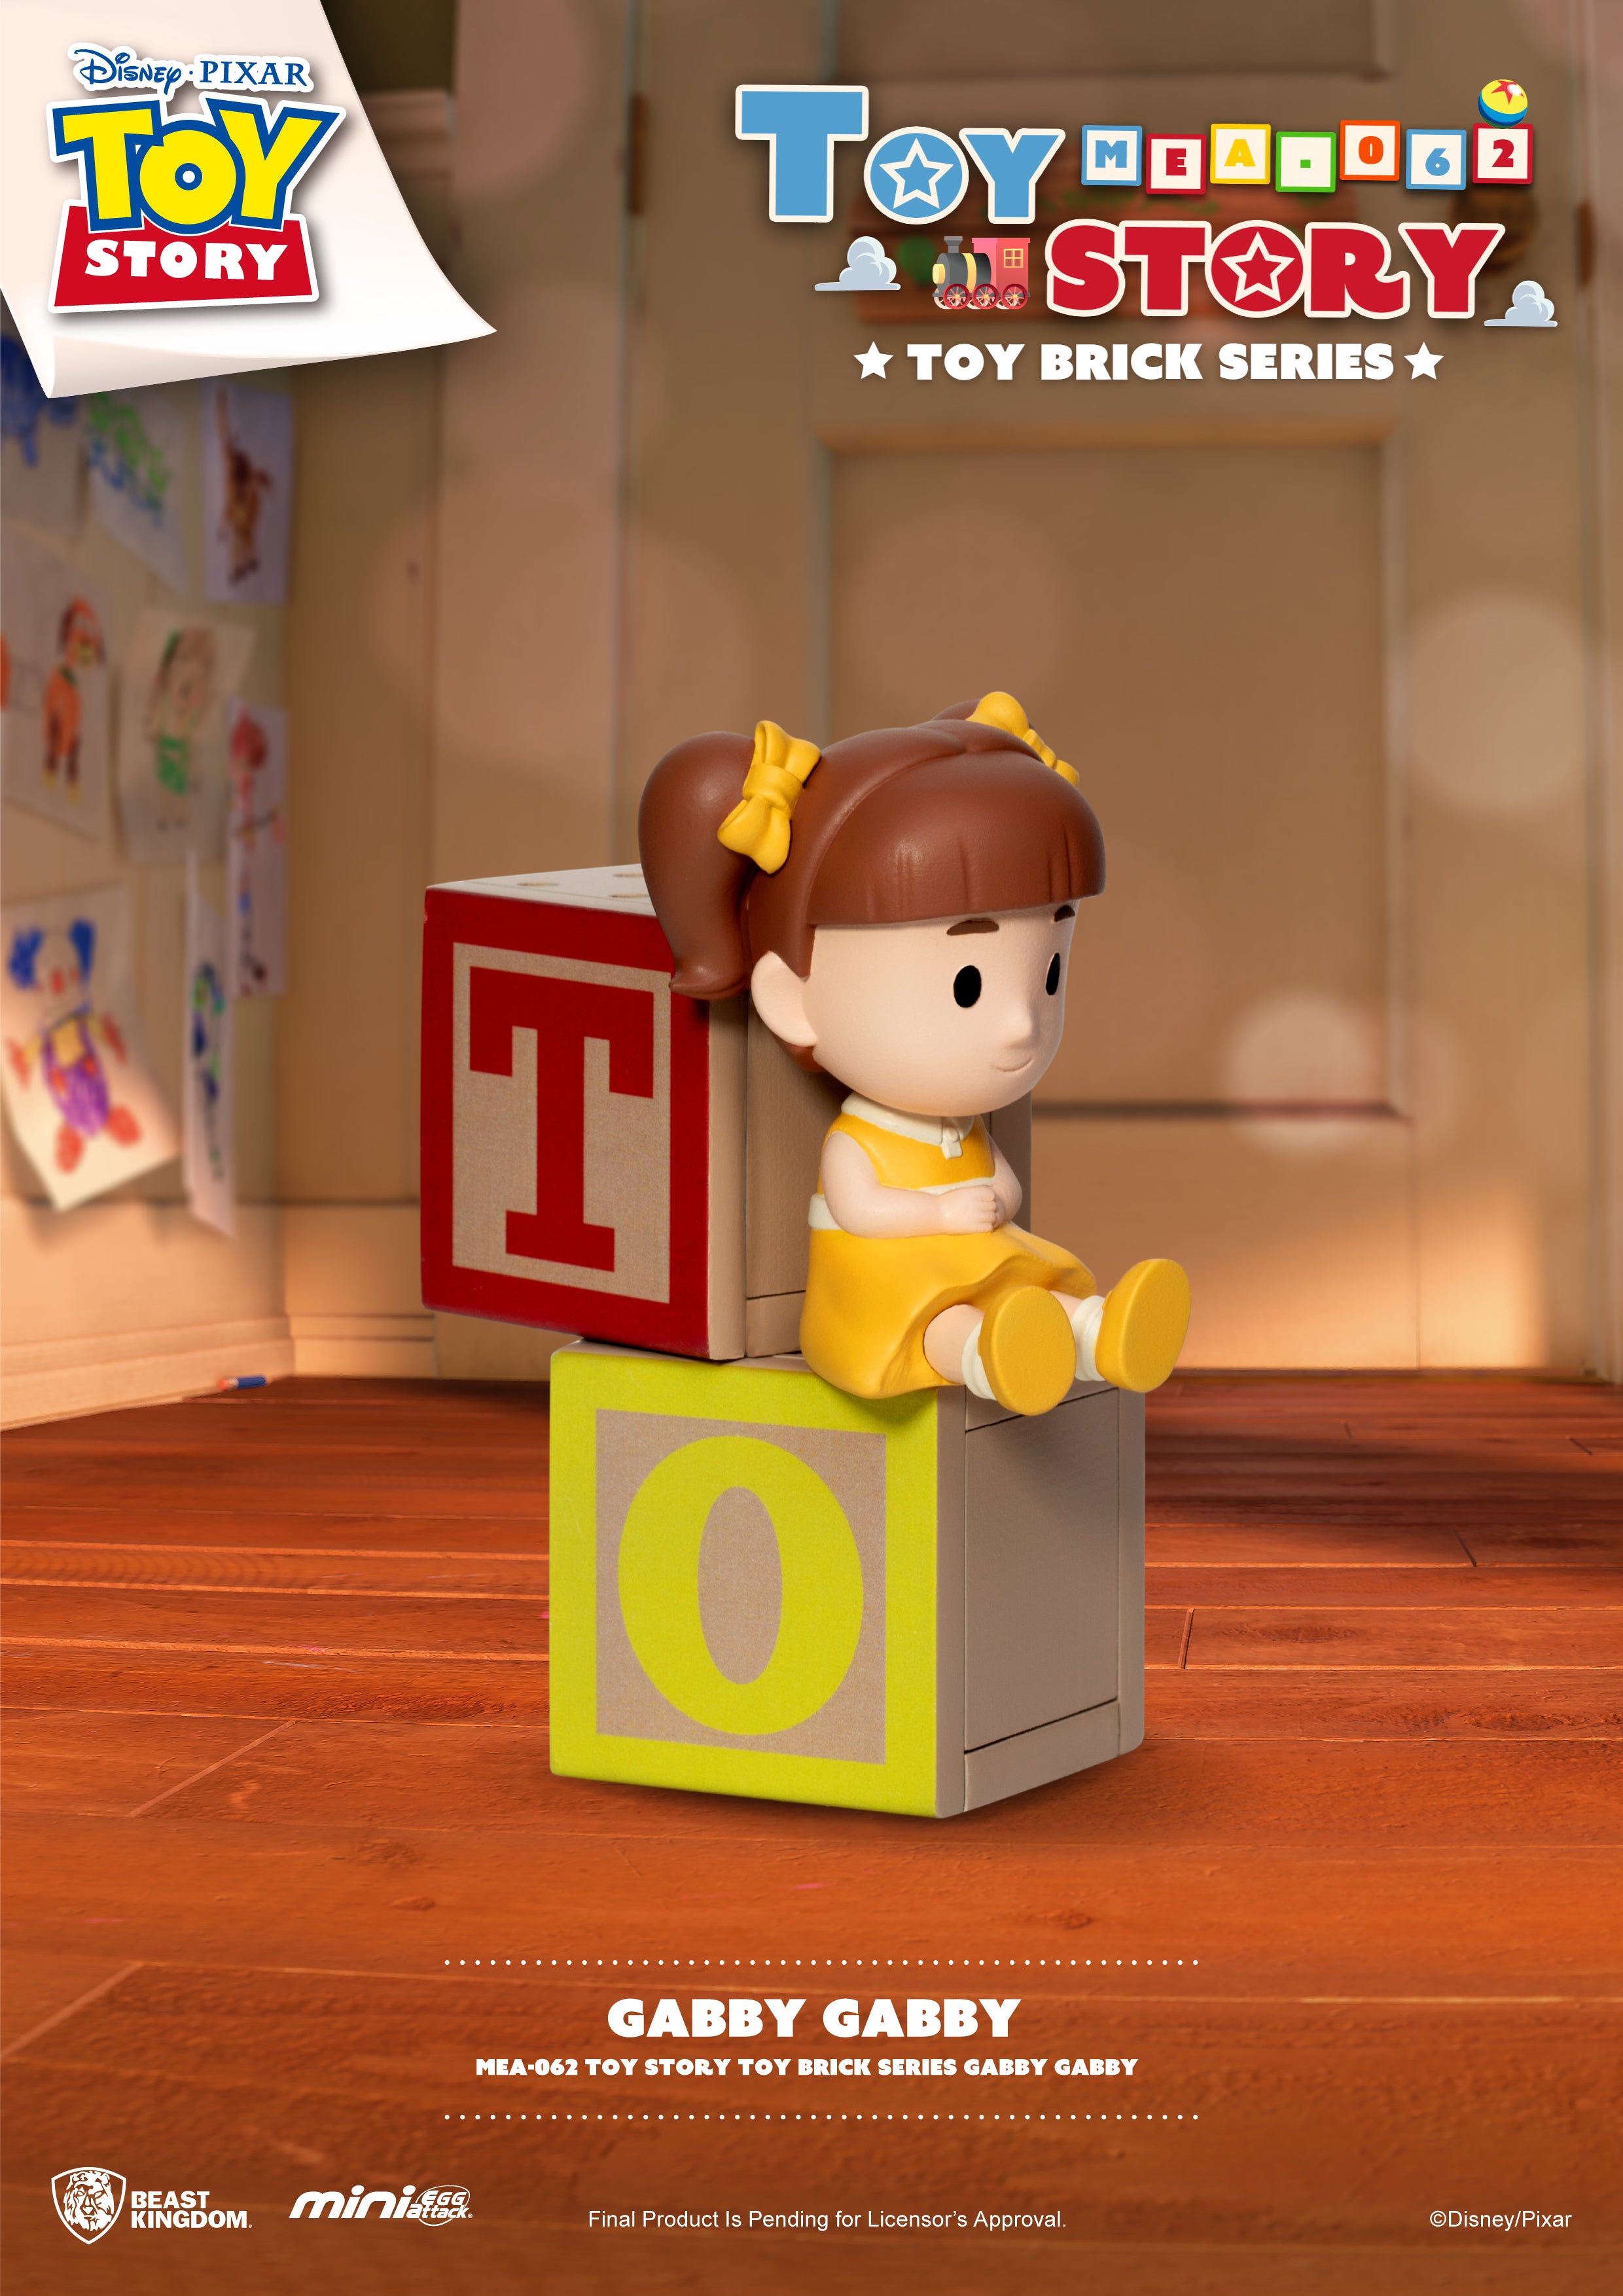 Beast Kingdom MEA-062 Toy Story toy brick series Blind Box Set (8PCS)